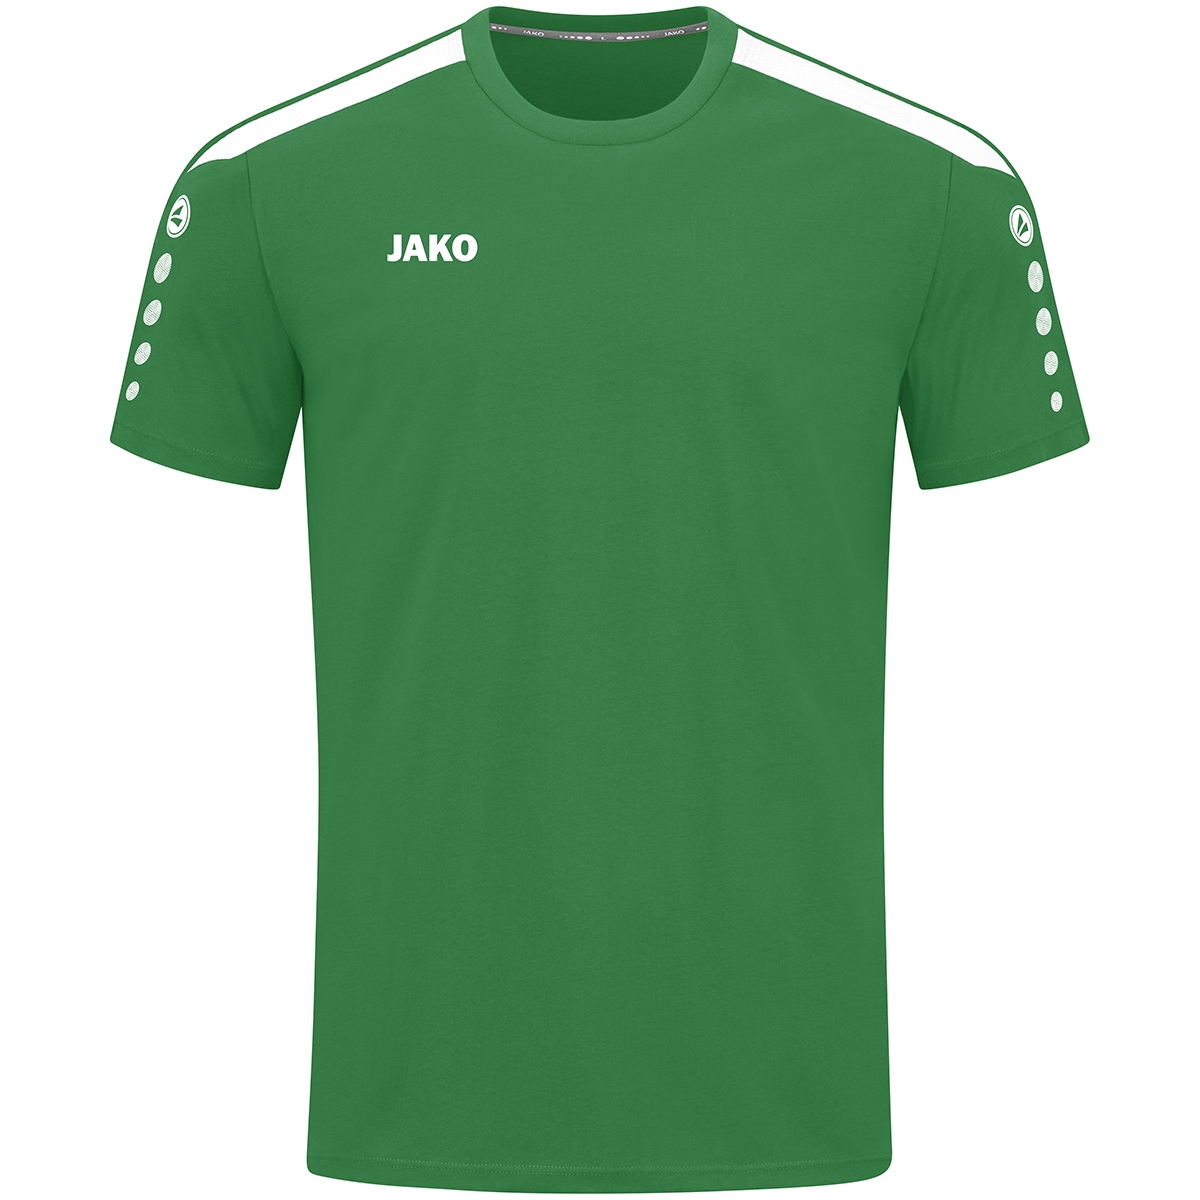 JAKO T-shirt Power 6123-200 product